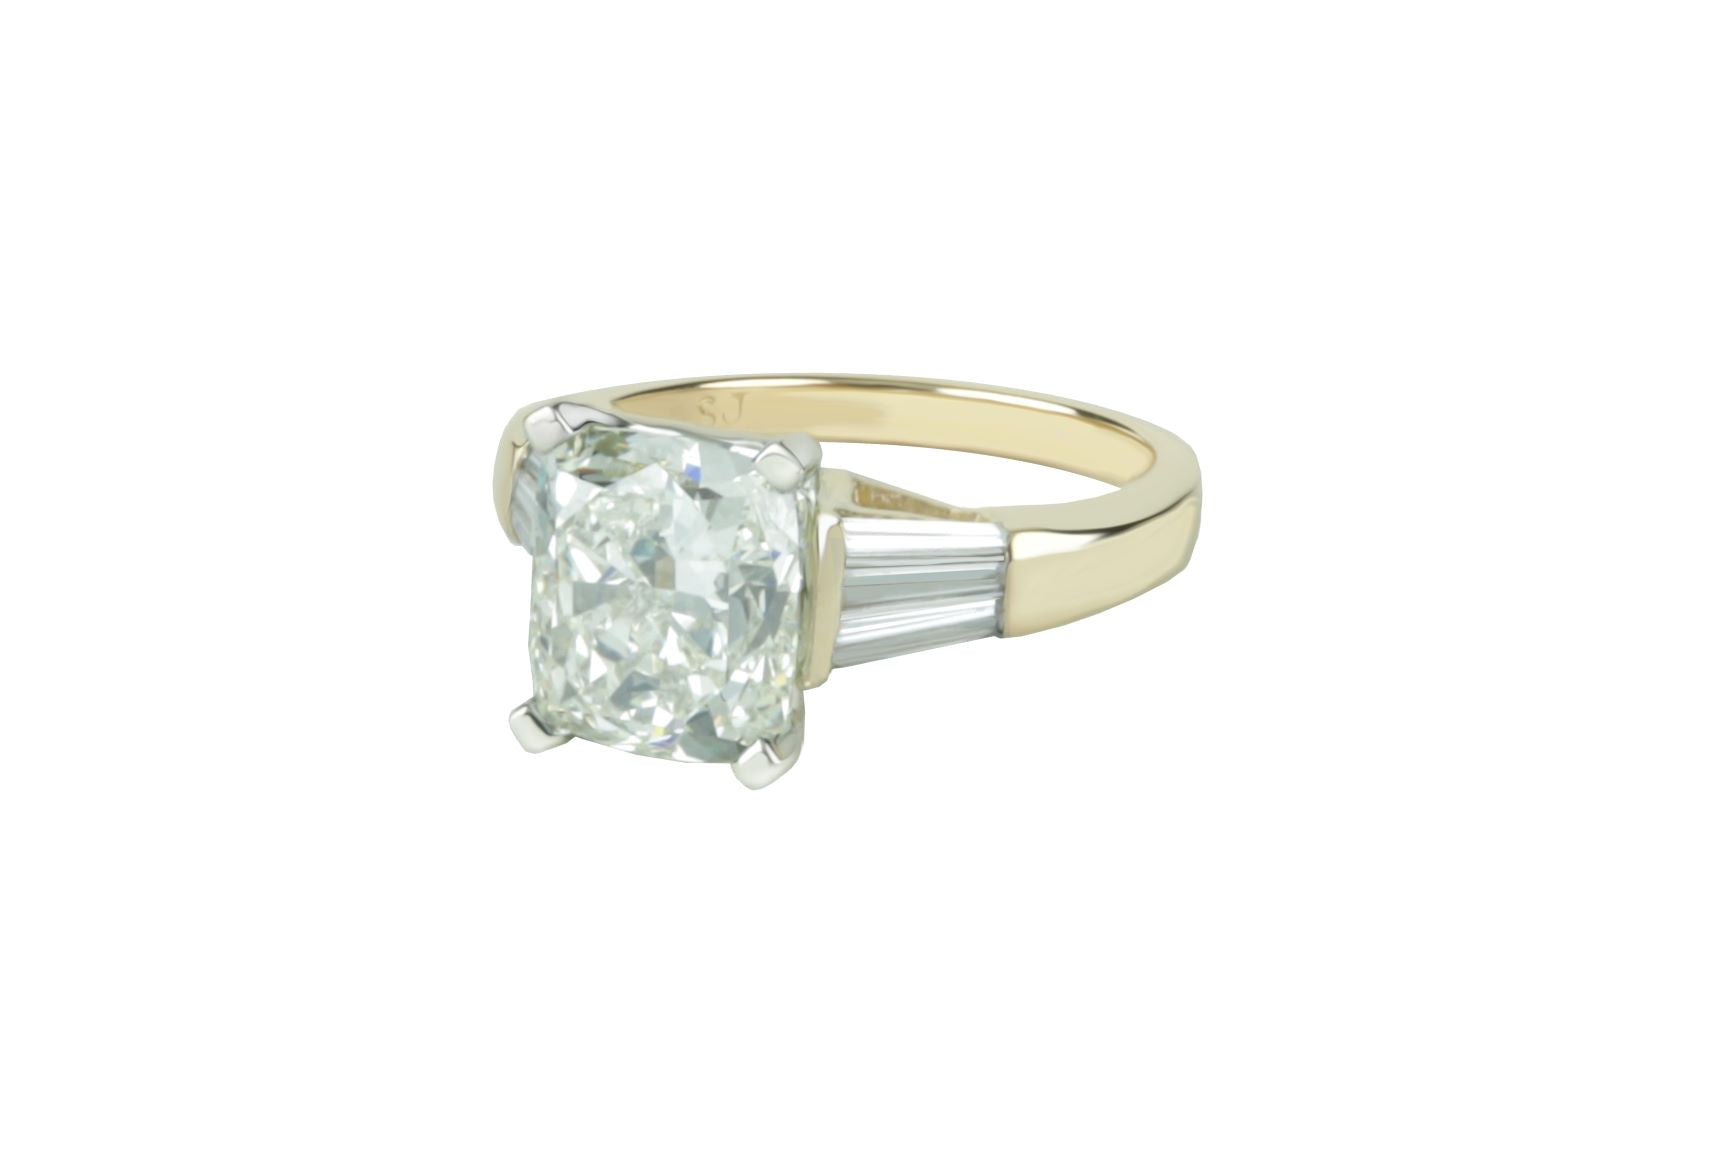 4.5 ctw GIA Certified Cushion Cut Diamond Engagement Ring 18k